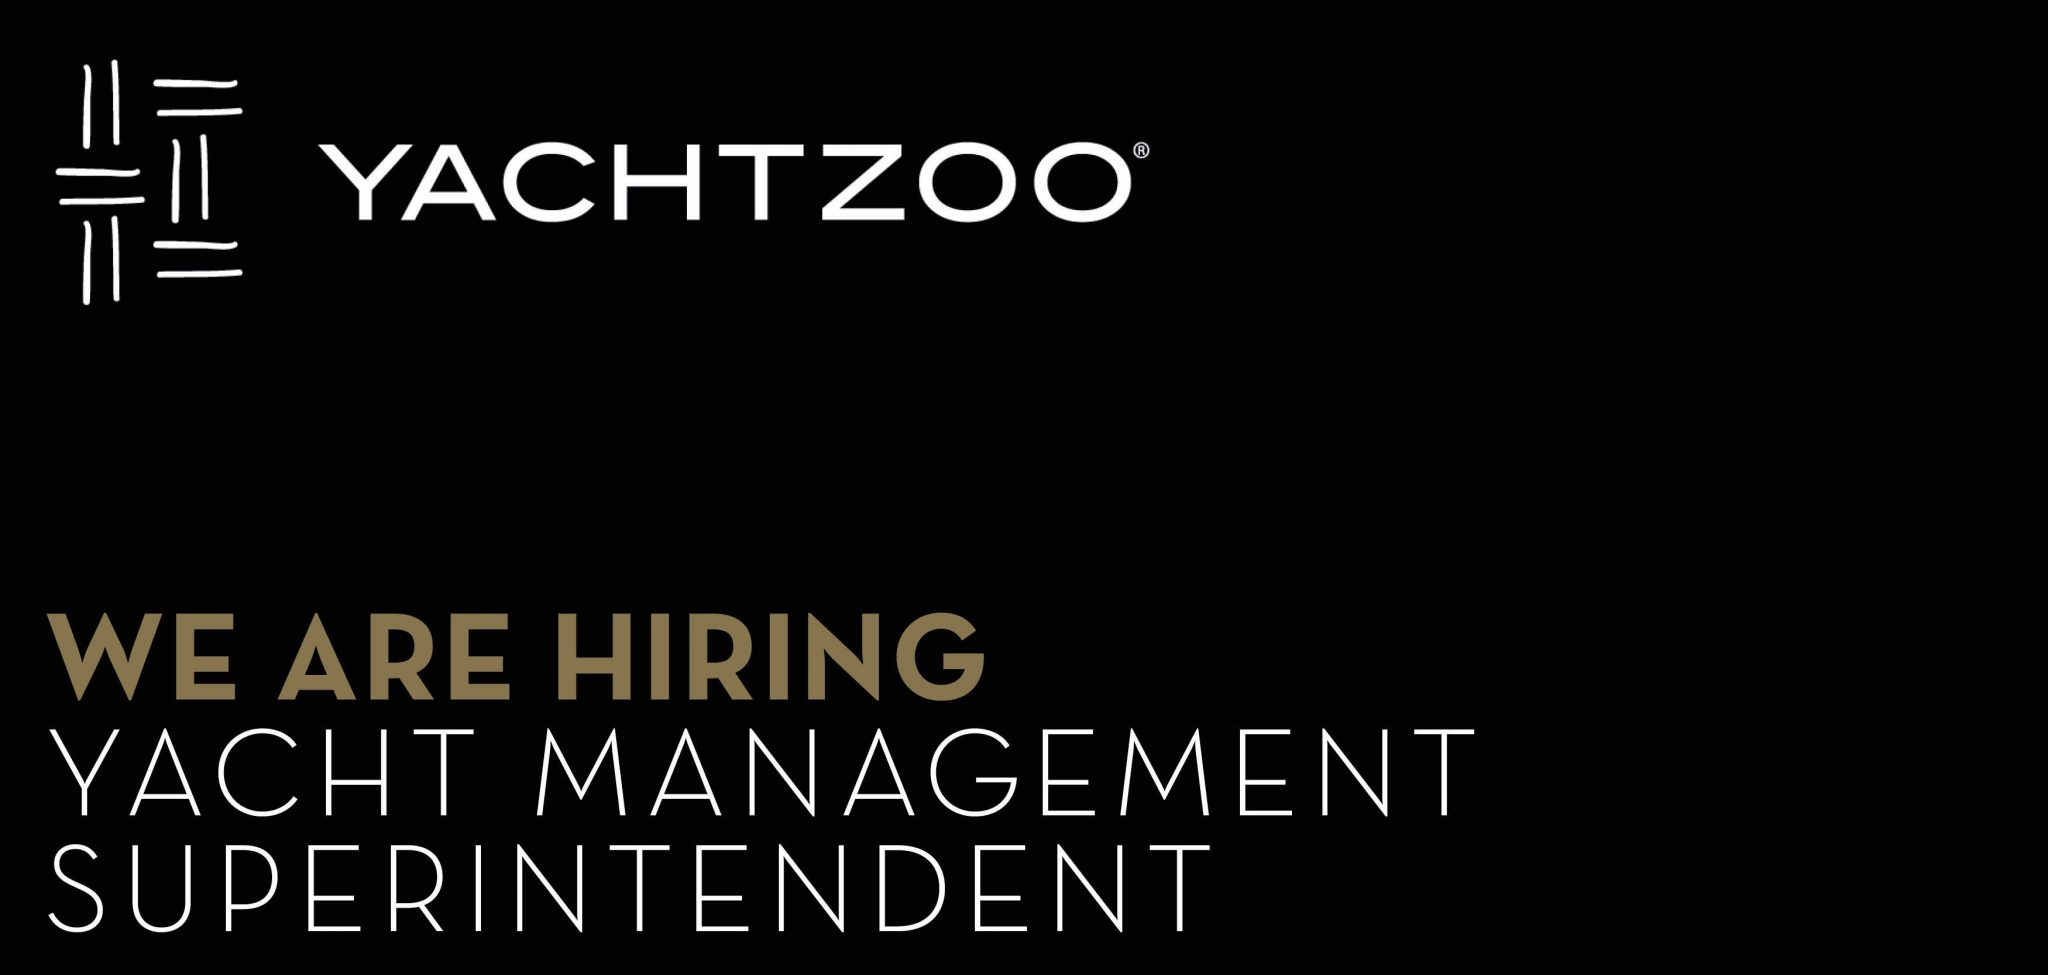 YACHTZOO is hiring: yacht superintendent